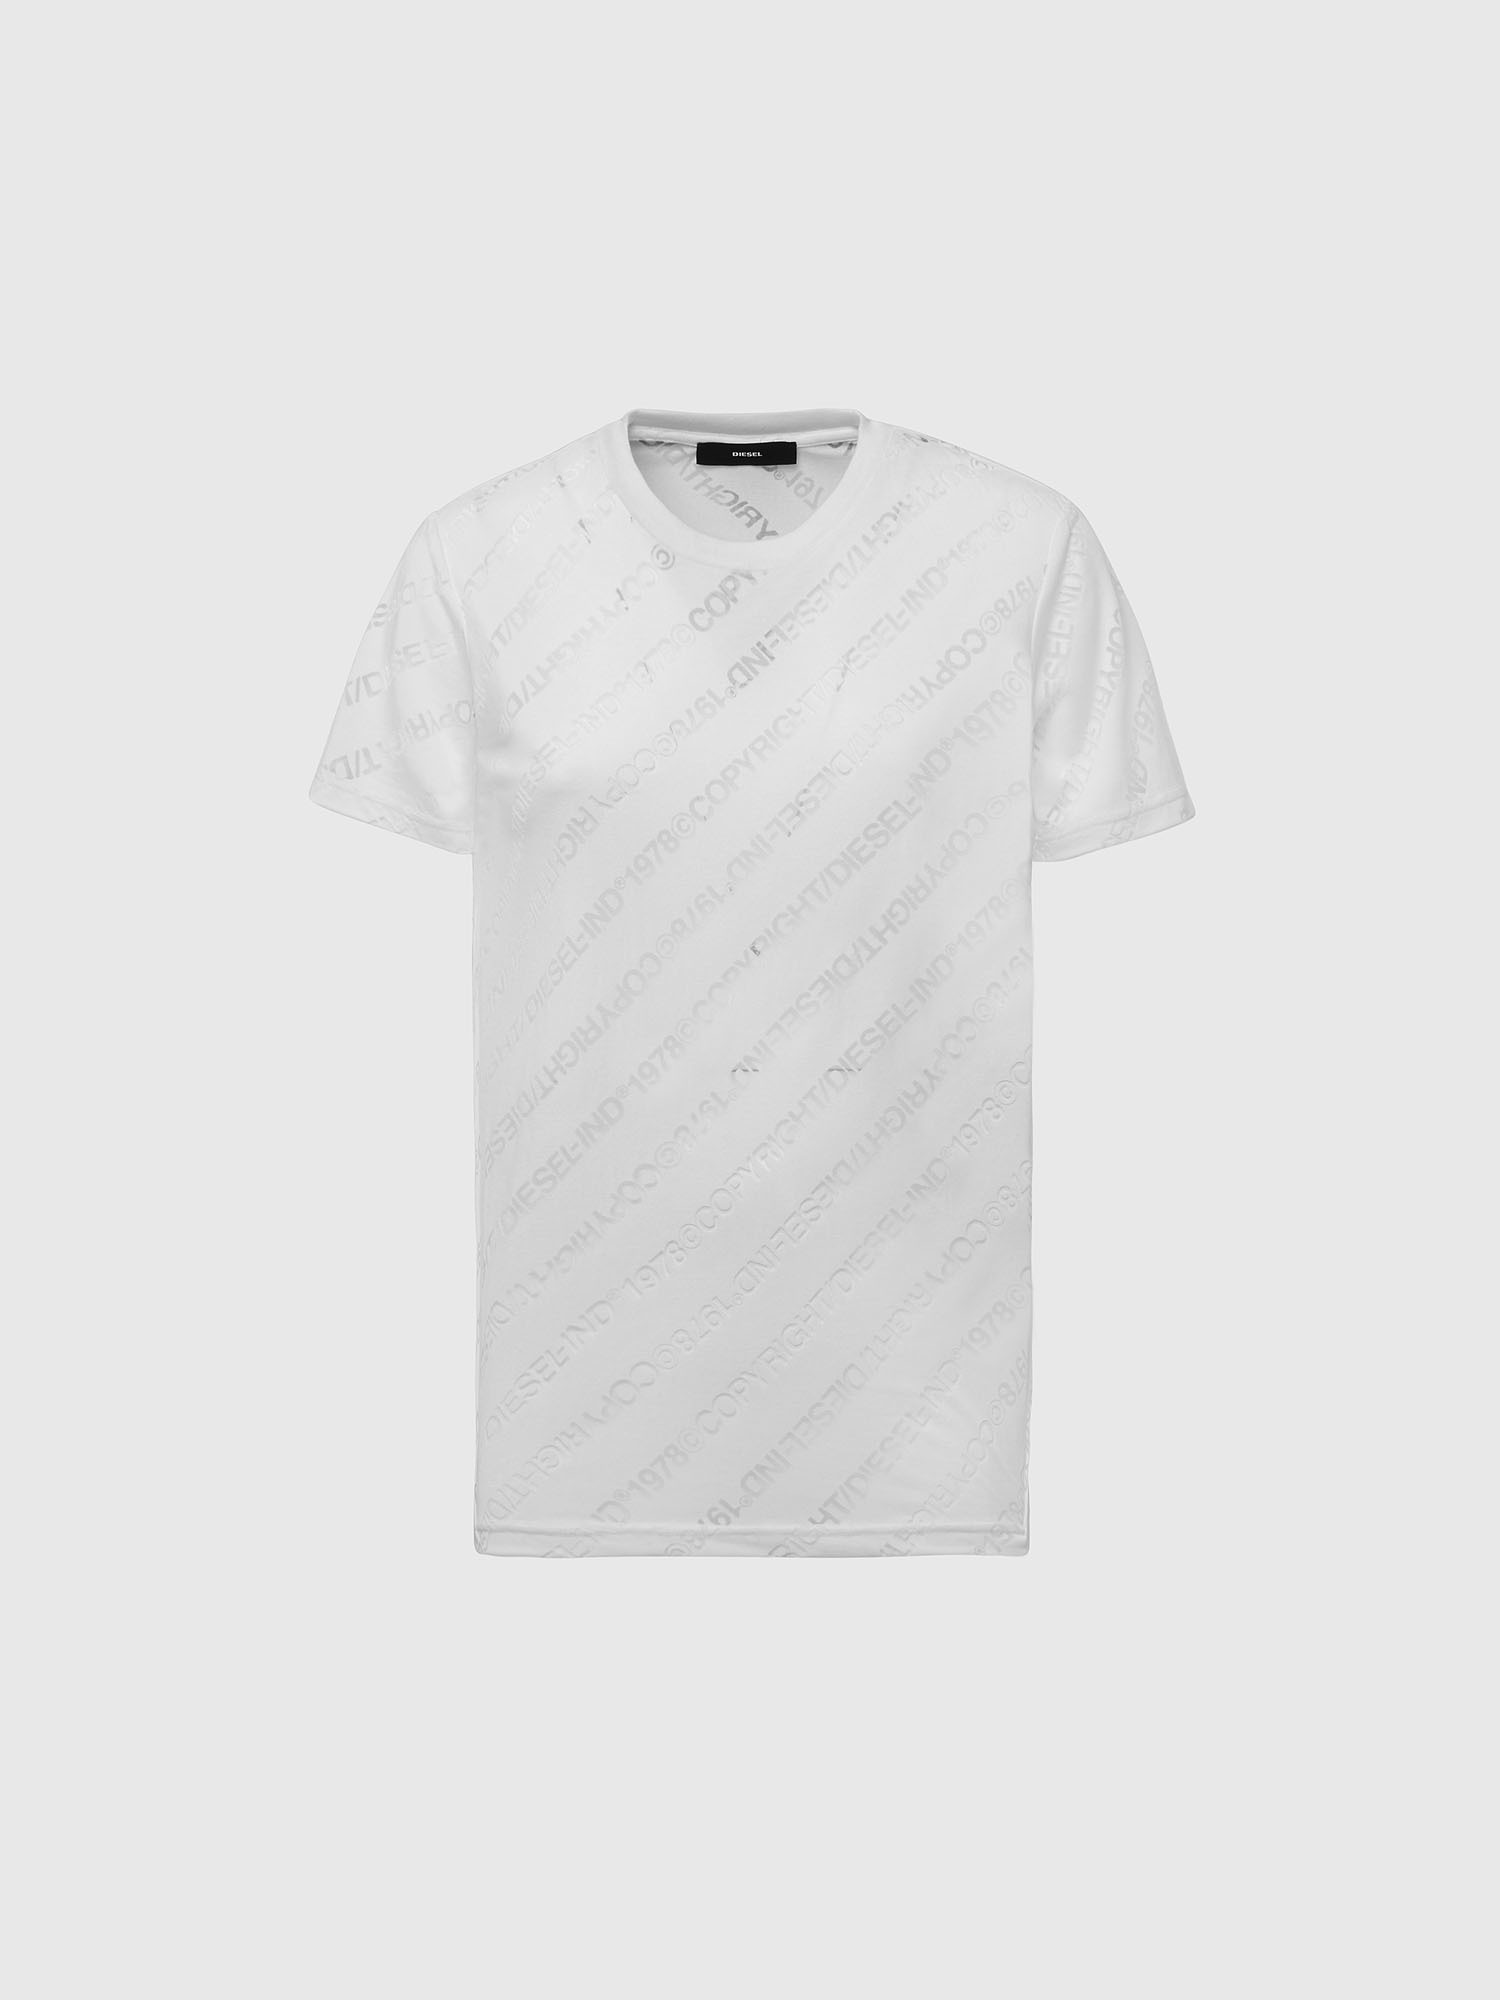 「DIESEL ディーゼル」透け感のある新作Tシャツ入荷です。_c0204280_12450193.jpg